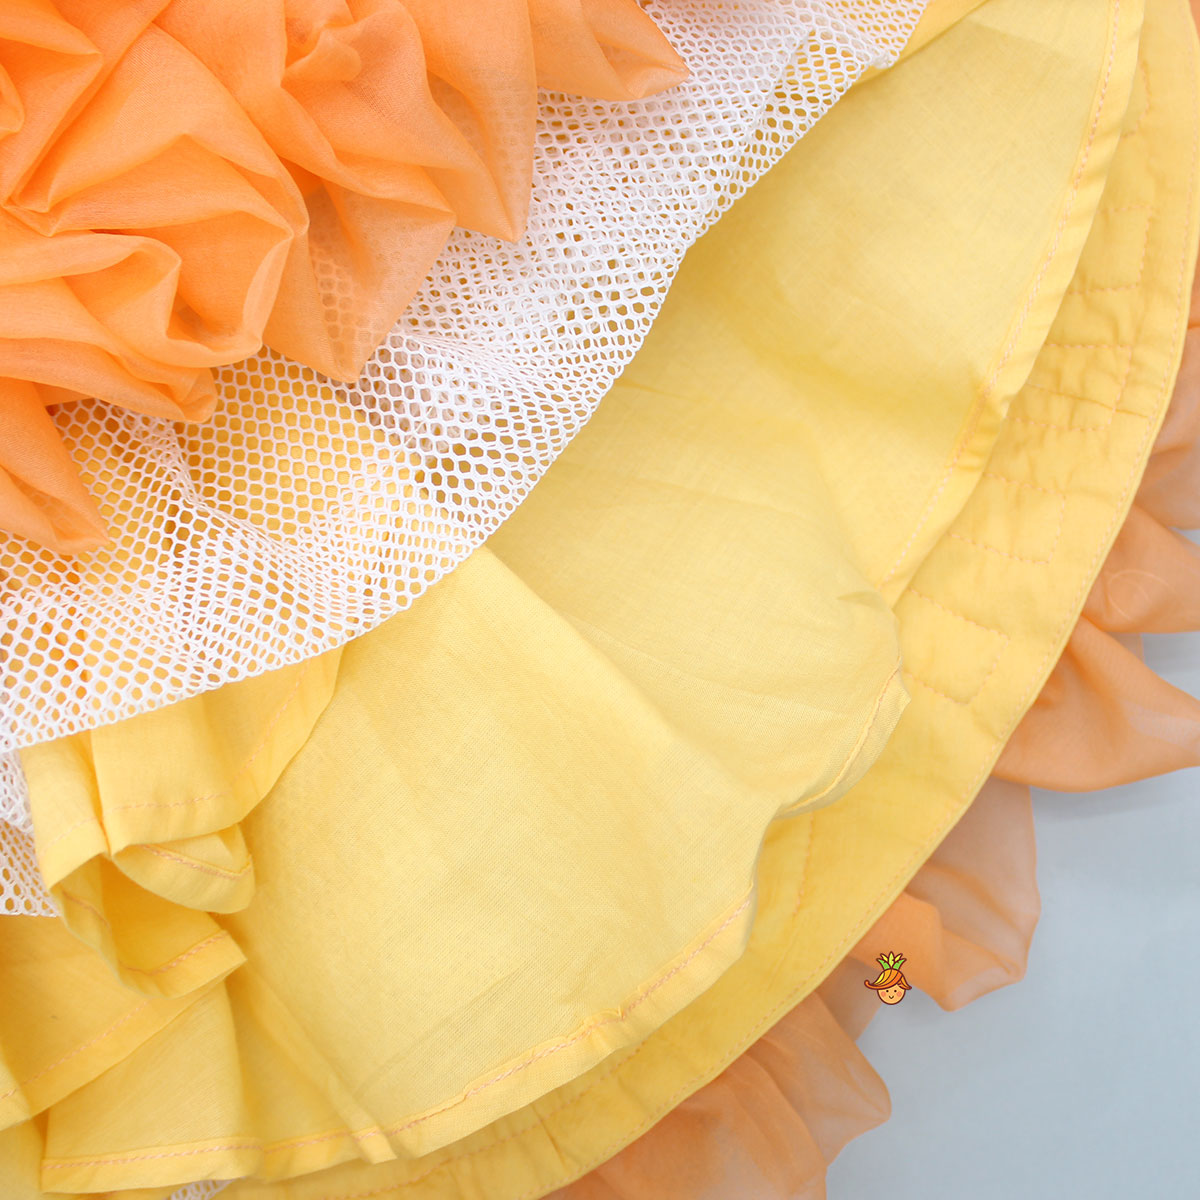 Organza Flowers Enhanced Orange Knee Length Dress